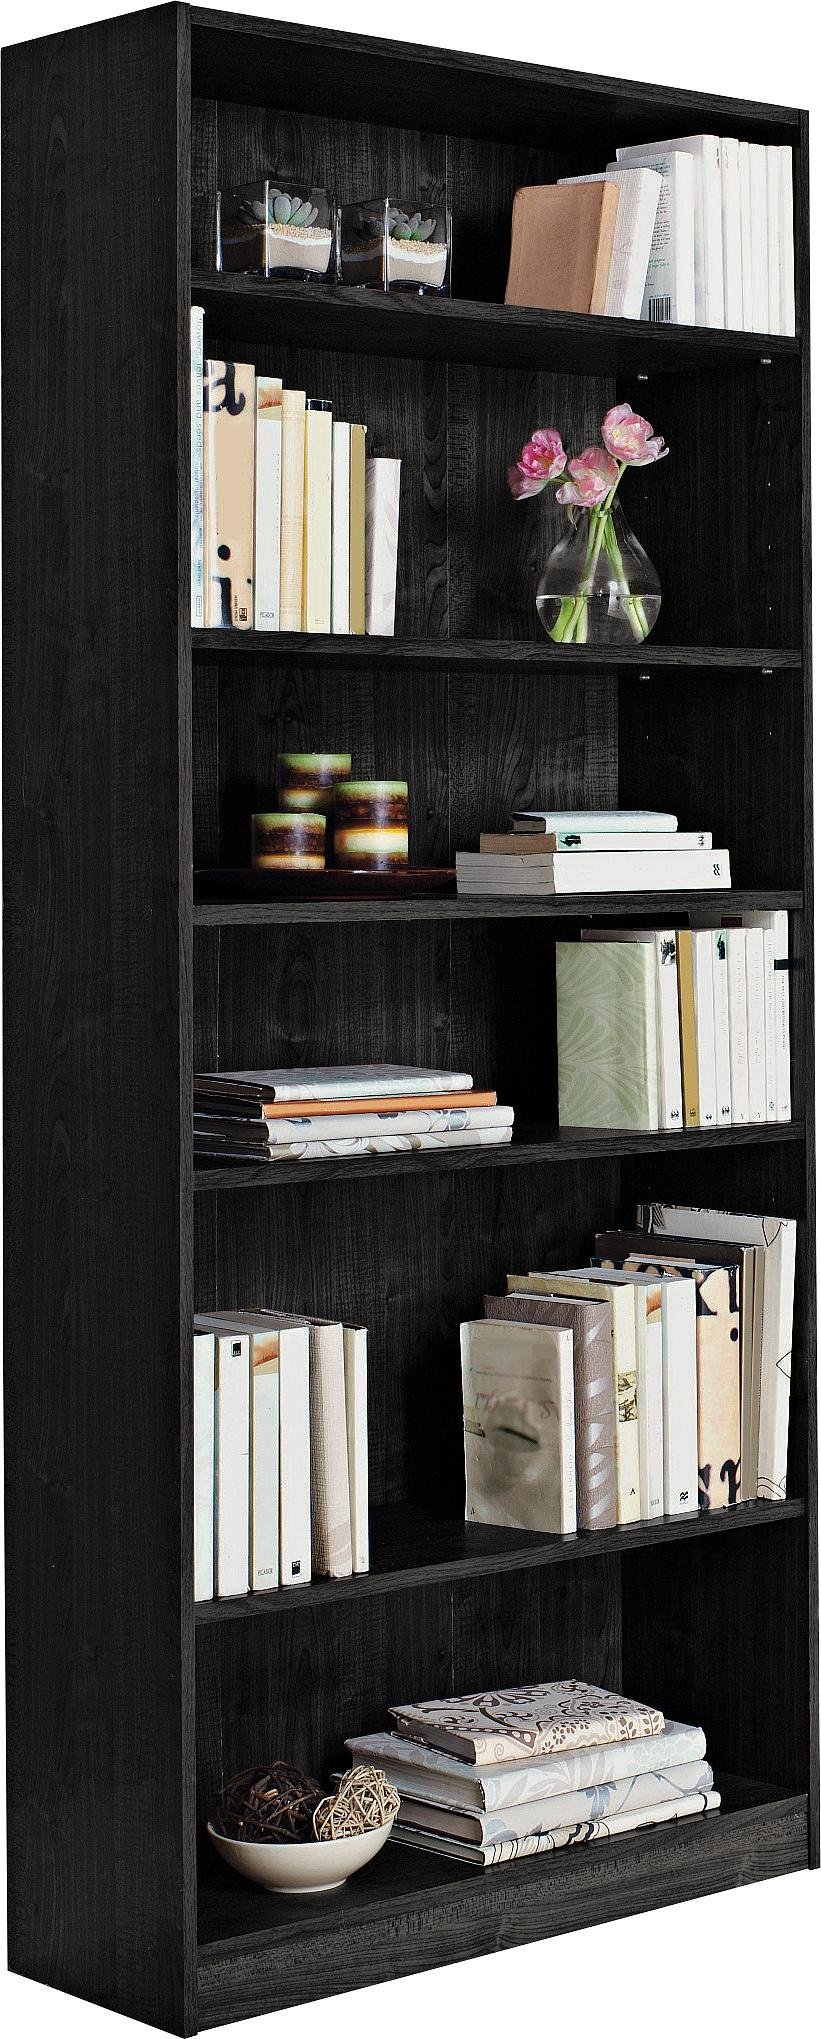 Argos Home Maine 5 Shelf Tall & Wide Deep Bookcase review